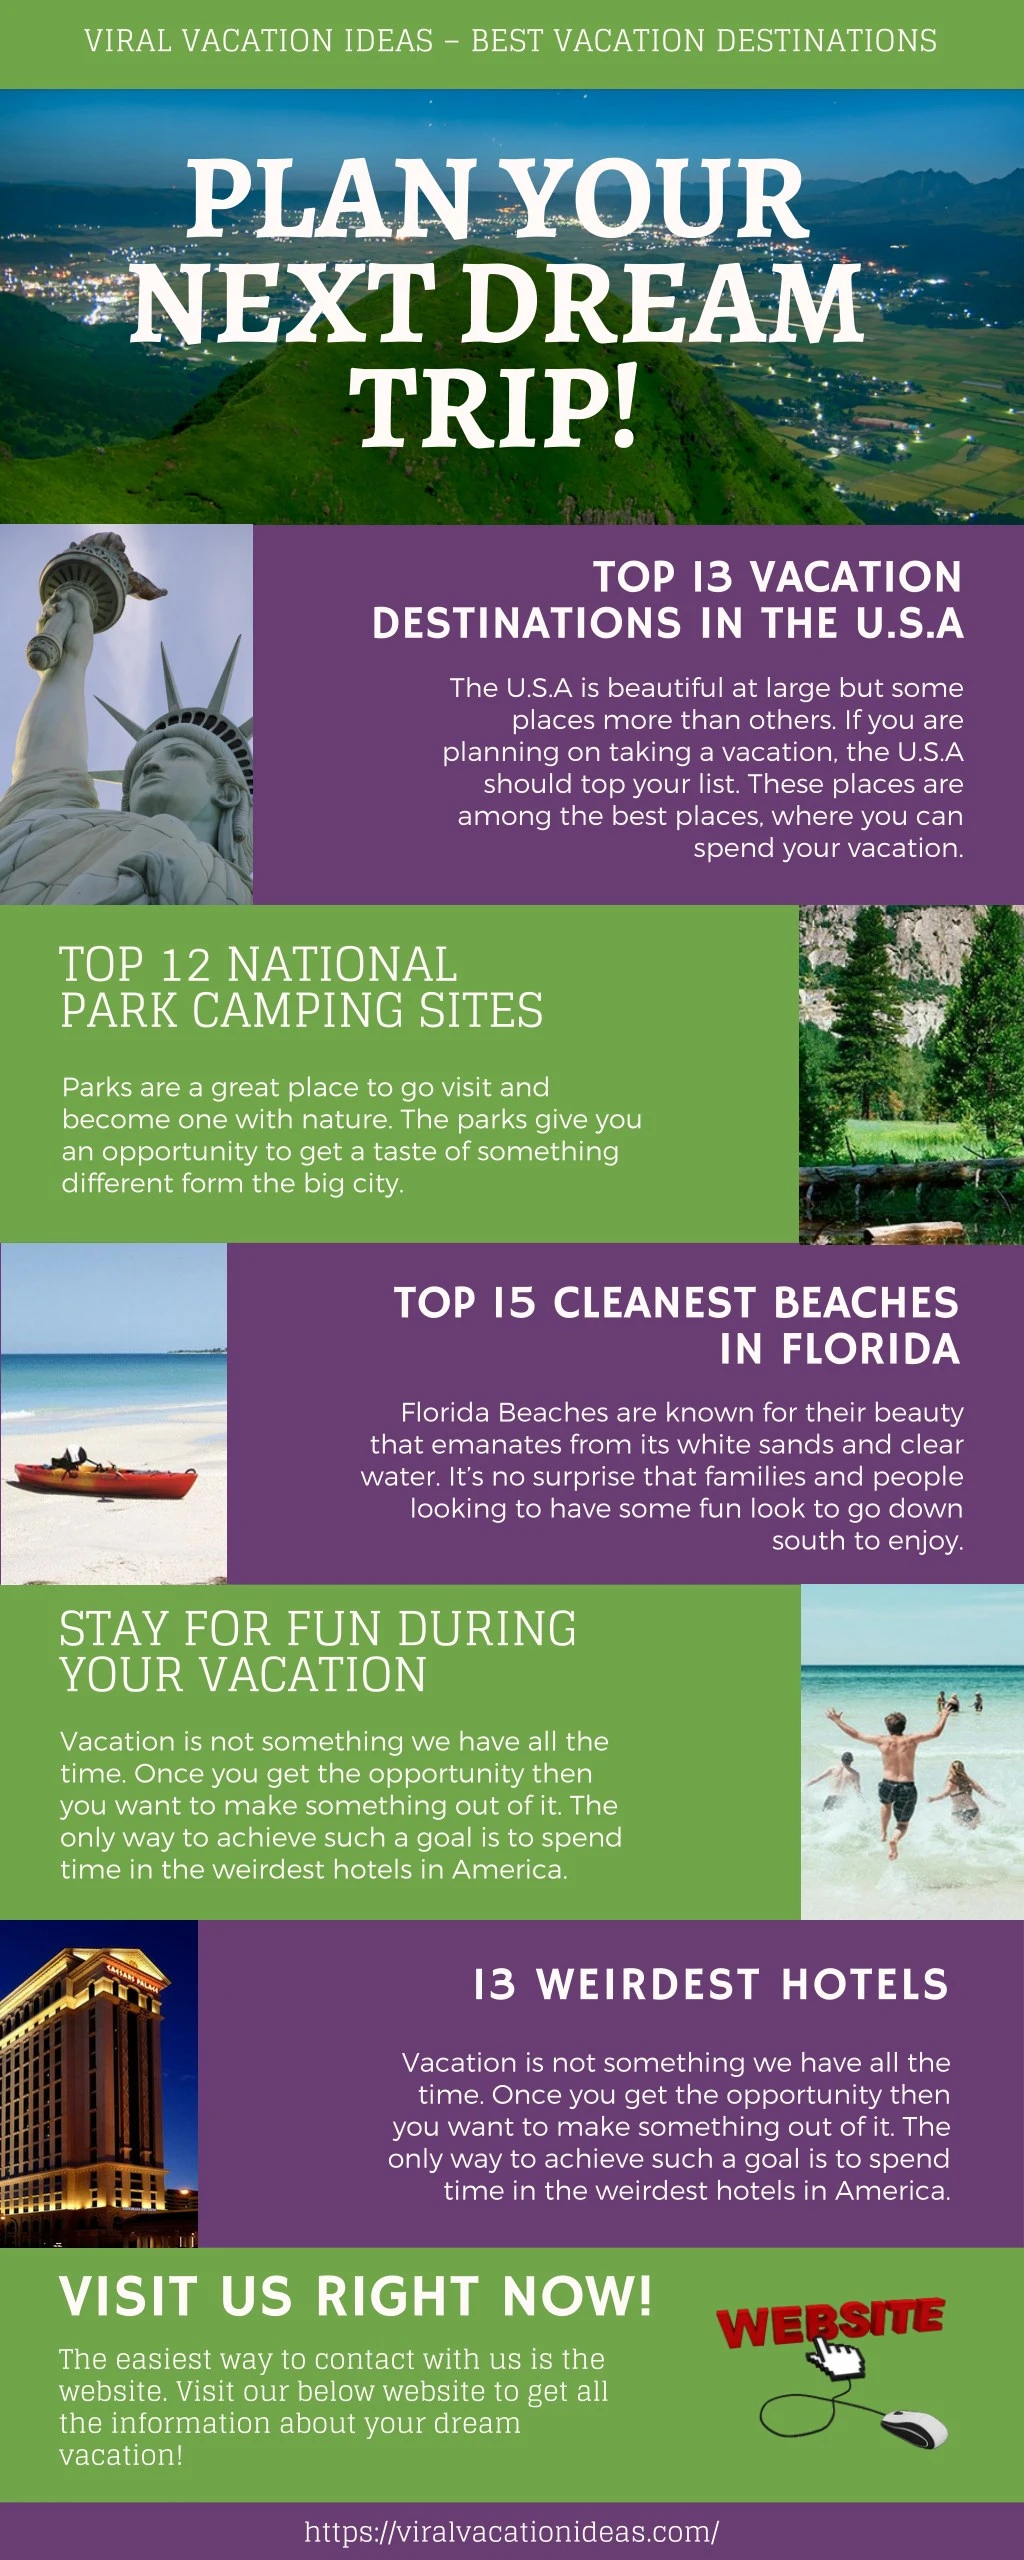 viral vacation ideas best vacation destinations